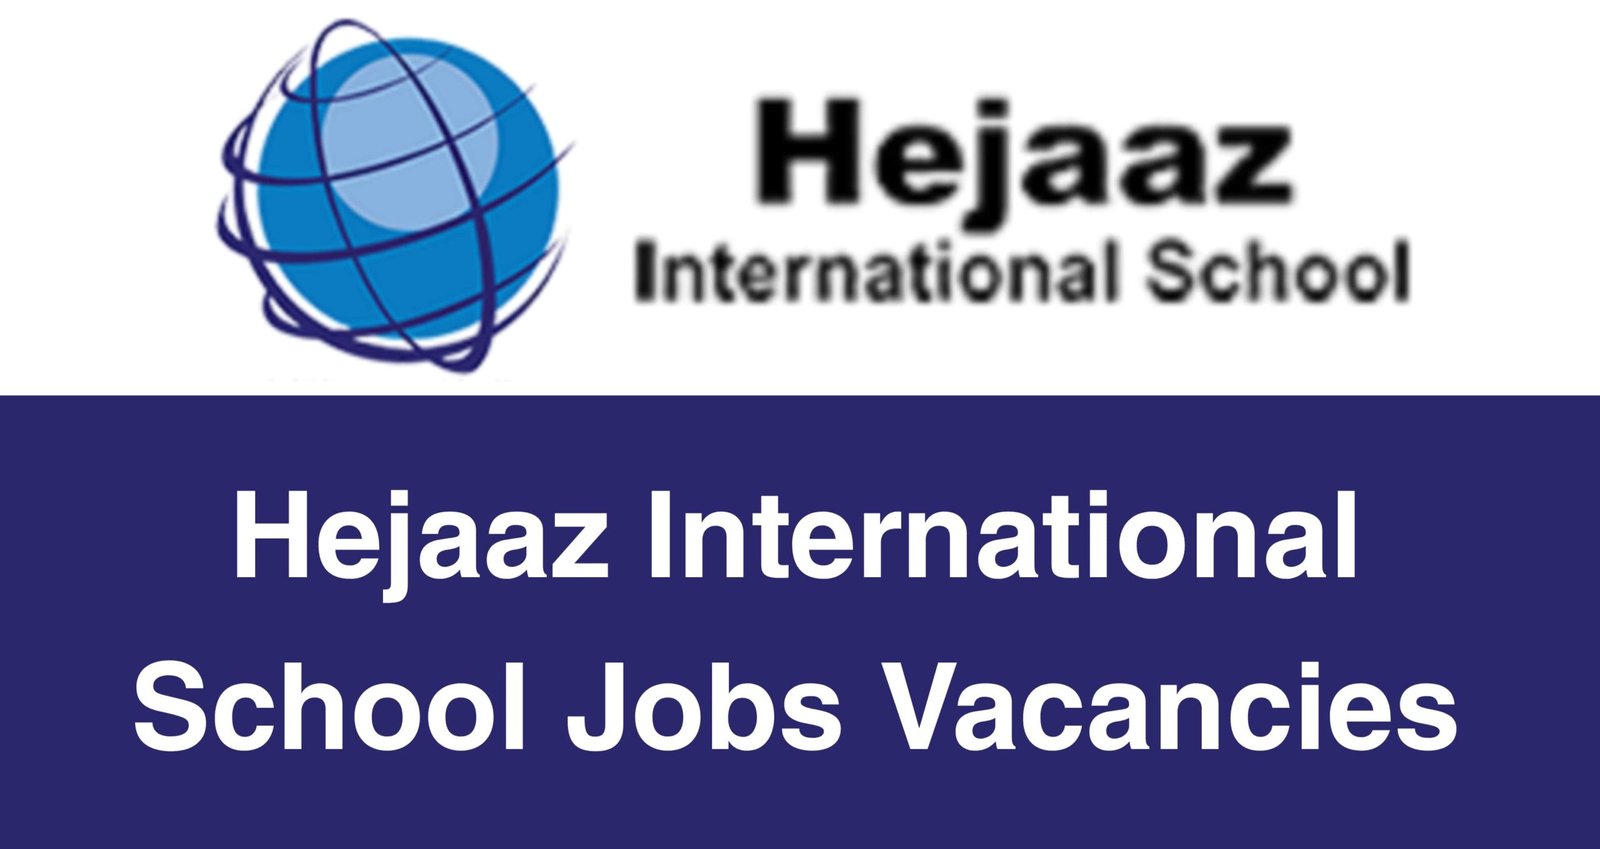 Hejaaz International School Jobs Vacancies